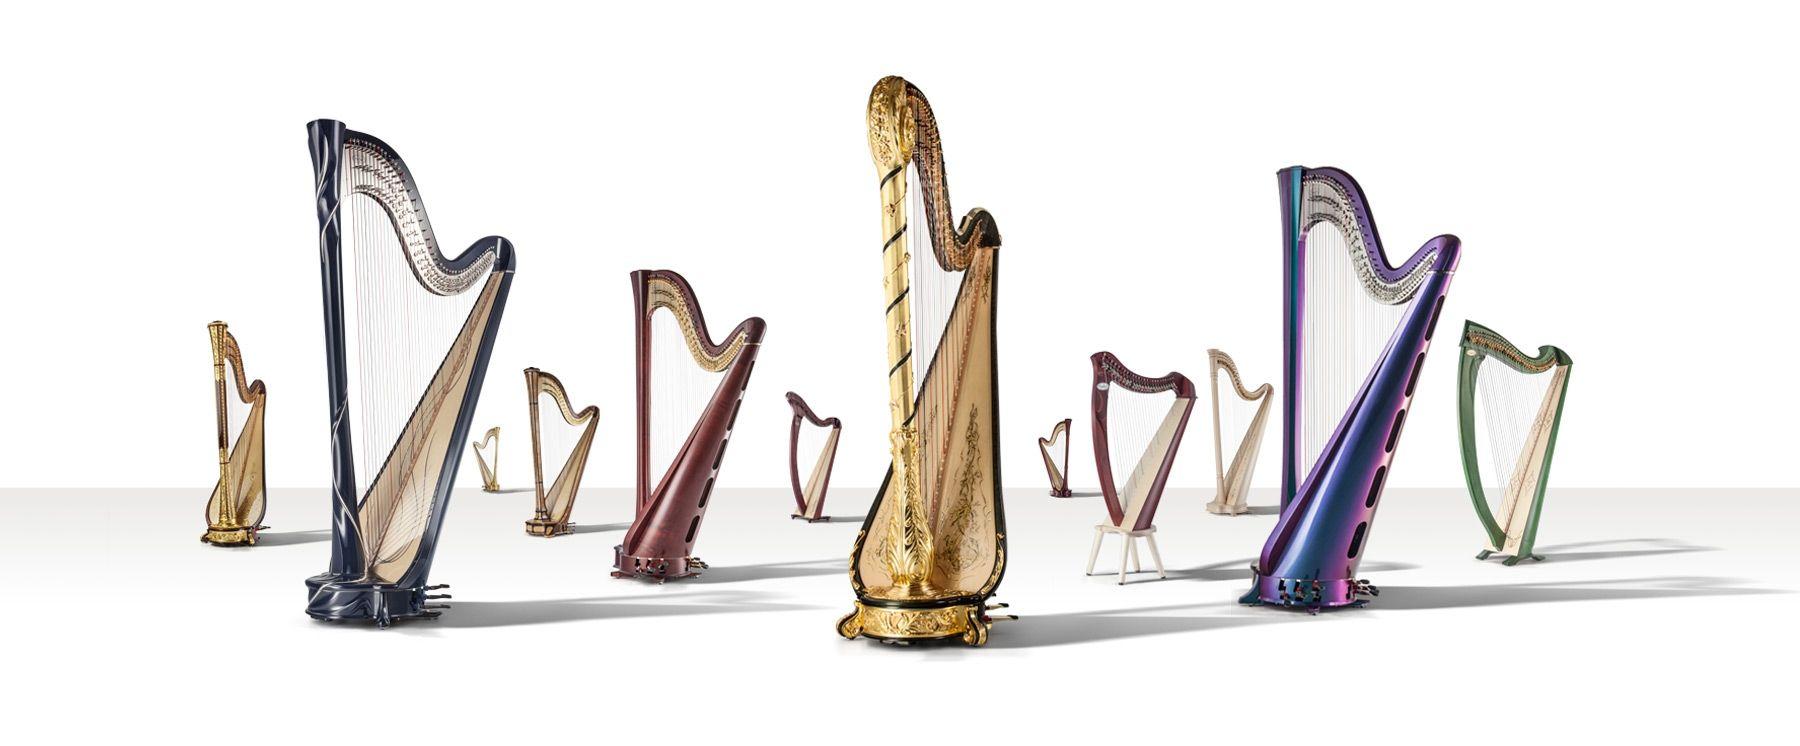 What Companies Is a Gold Harp Logo - Salvi Harps - Pedal Harps & Lever Harps